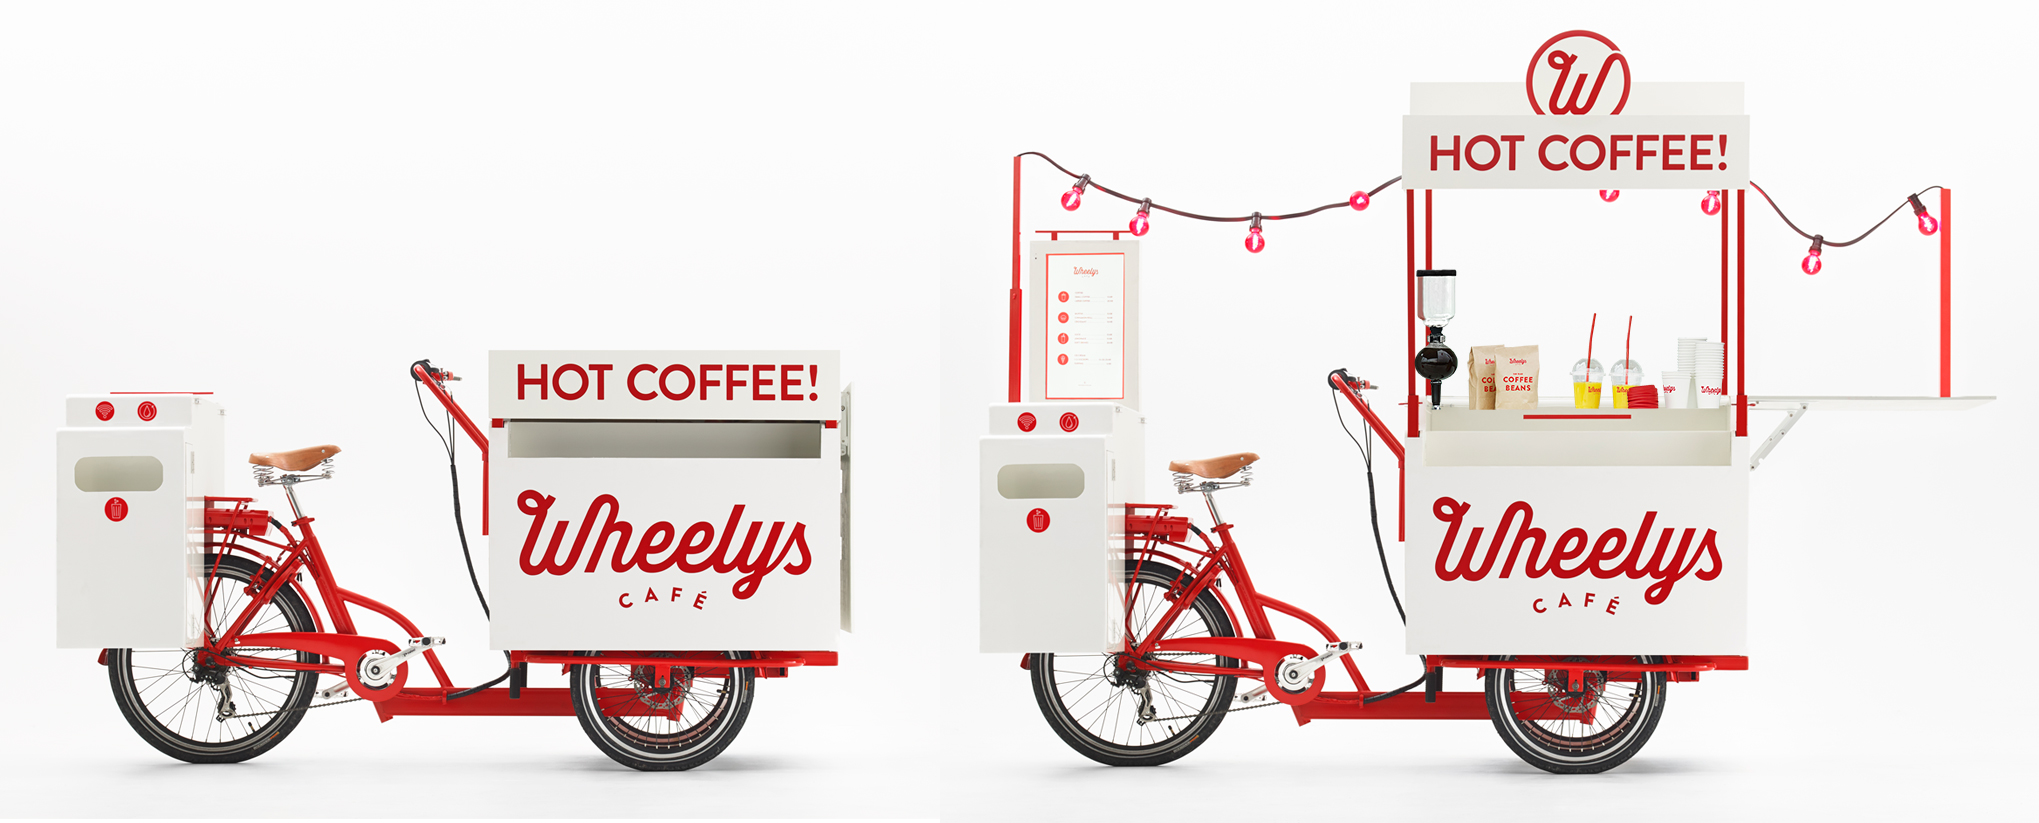 Wheelys mobile cafe